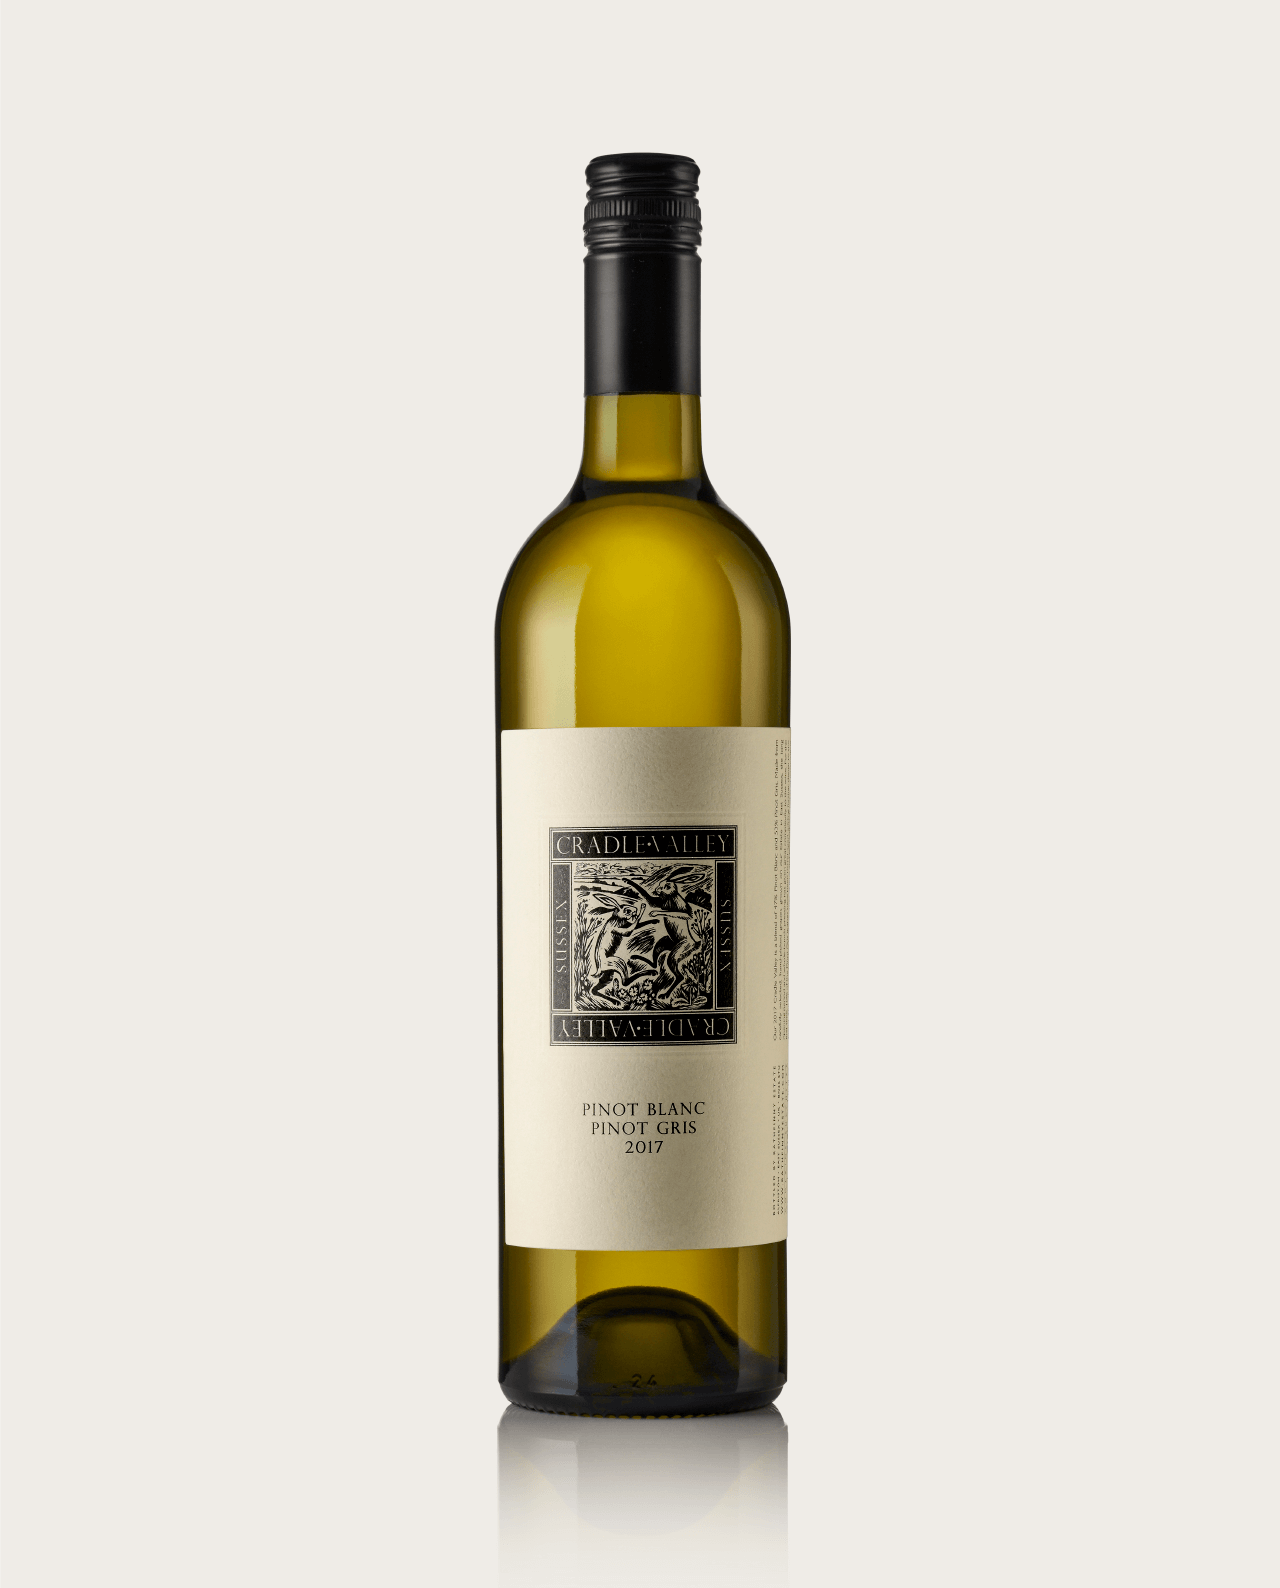 Cradle Valley Pinot Blanc Pinot Gris